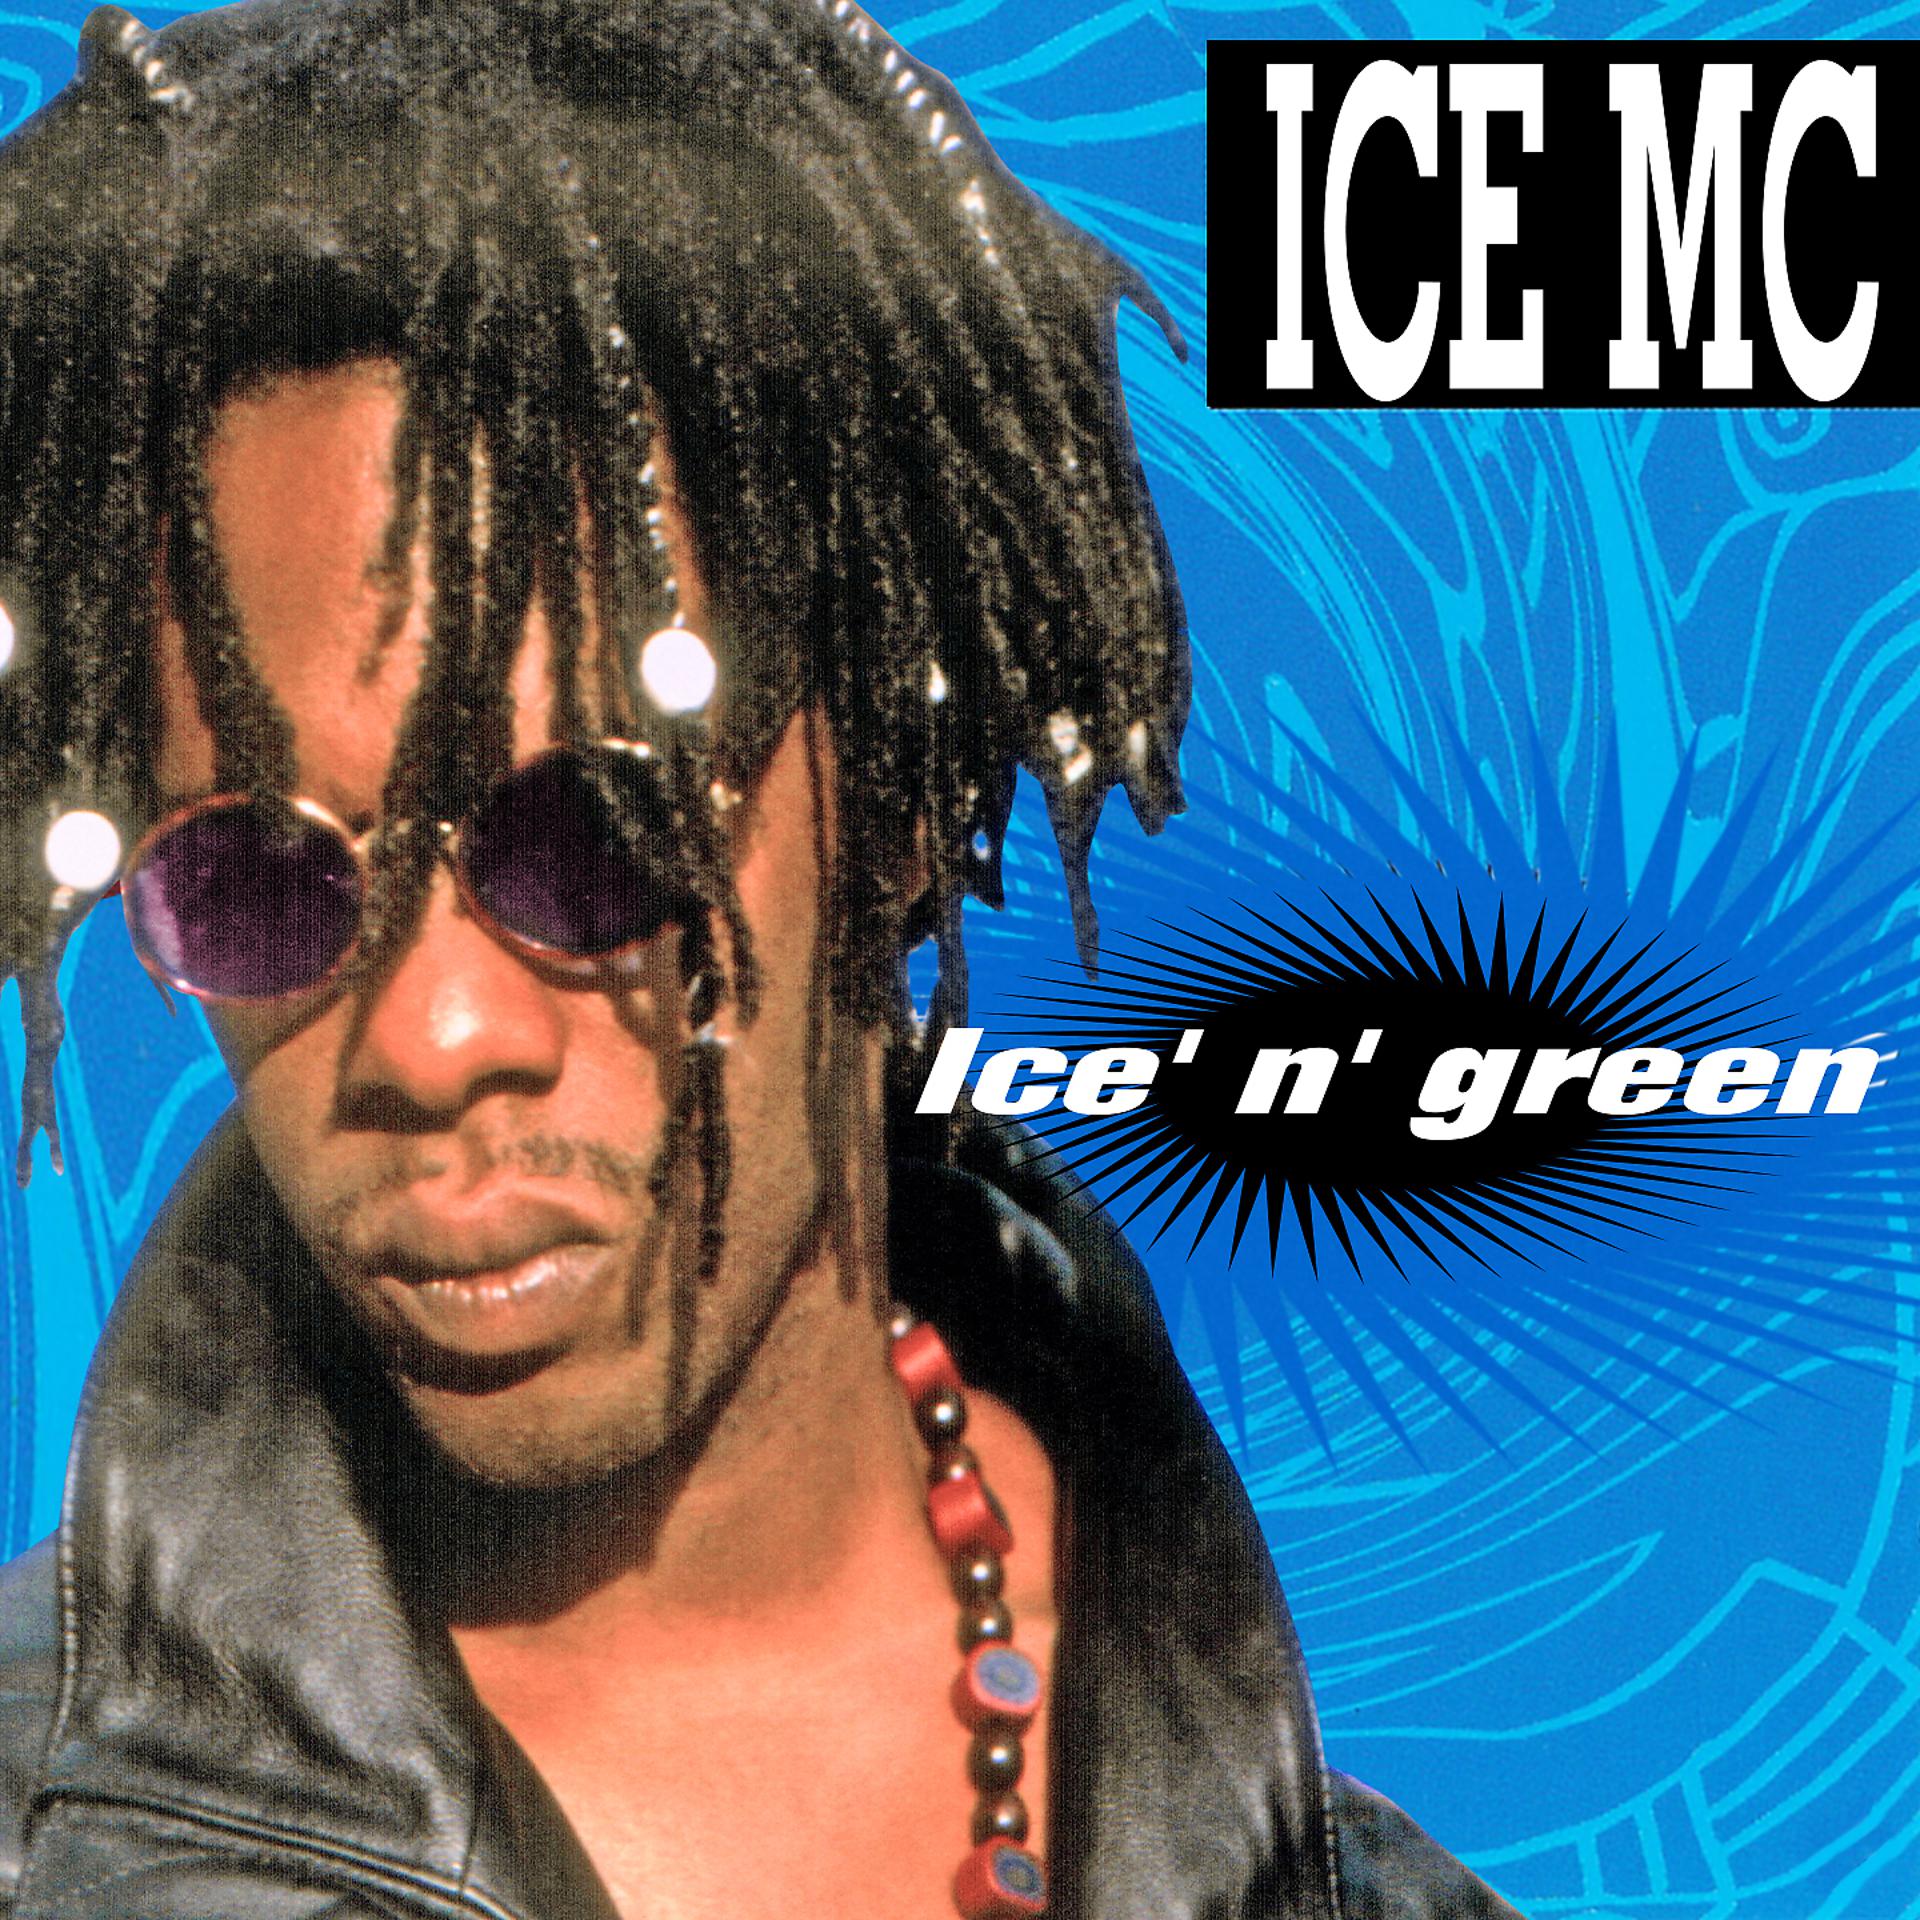 Ice MC Ice n Green обложка. Ice MC фото группы. Ice MC Ice n Green 1994. Think about the way ice mc remix